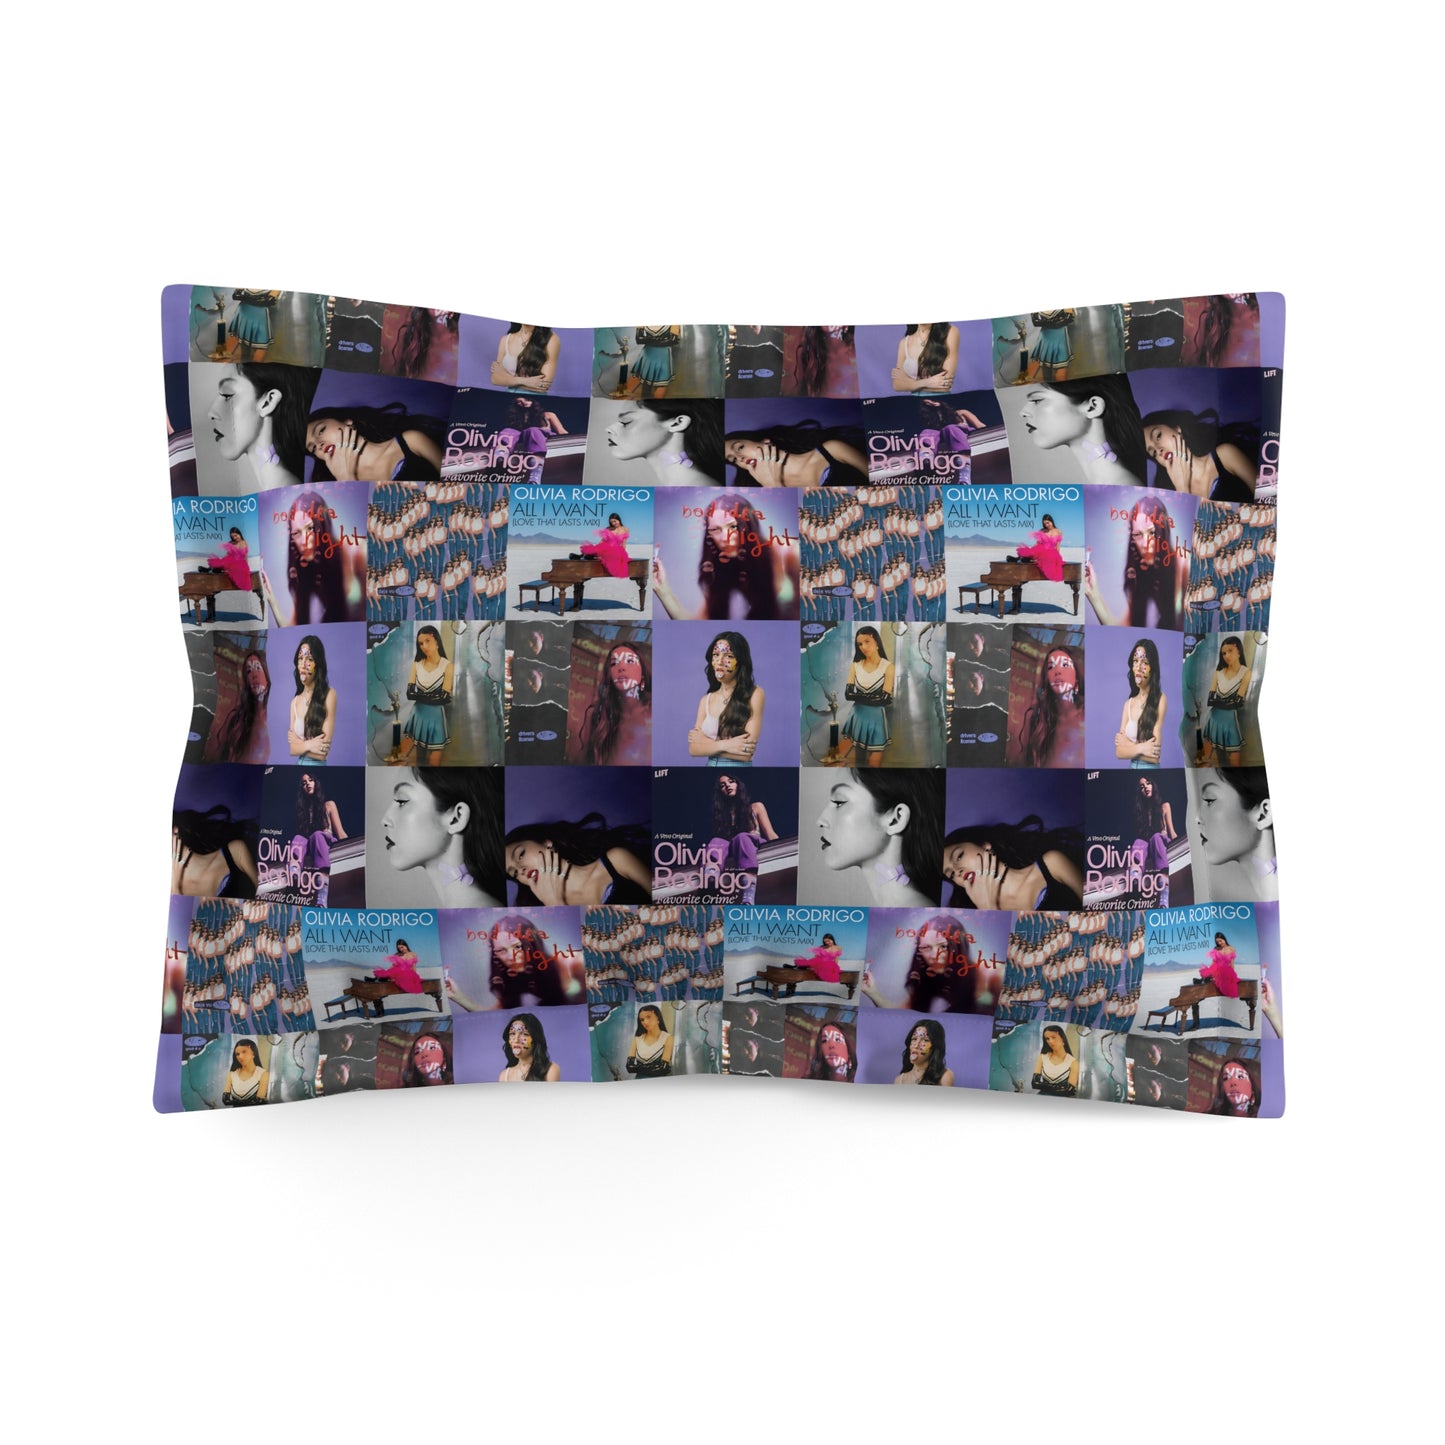 Olivia Rodrigo Album Cover Art Collage Microfiber Pillow Sham